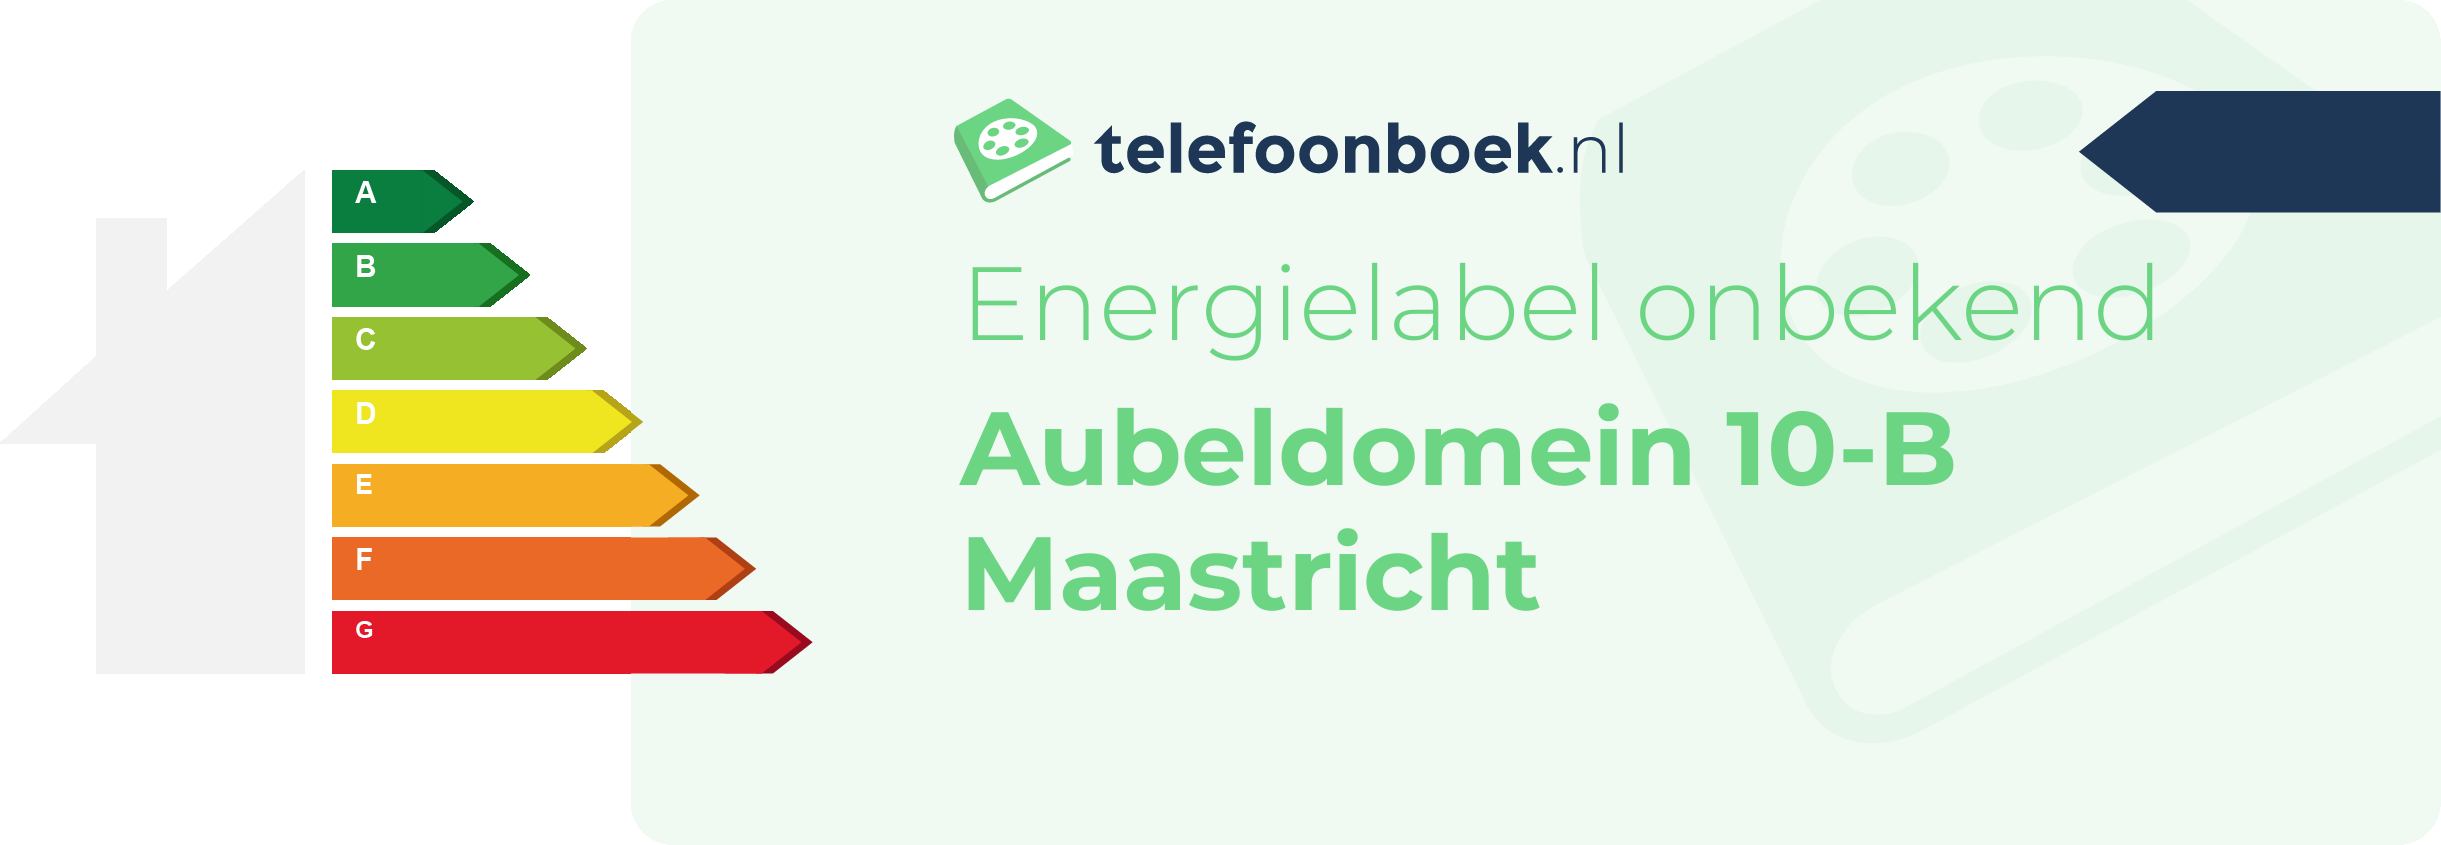 Energielabel Aubeldomein 10-B Maastricht